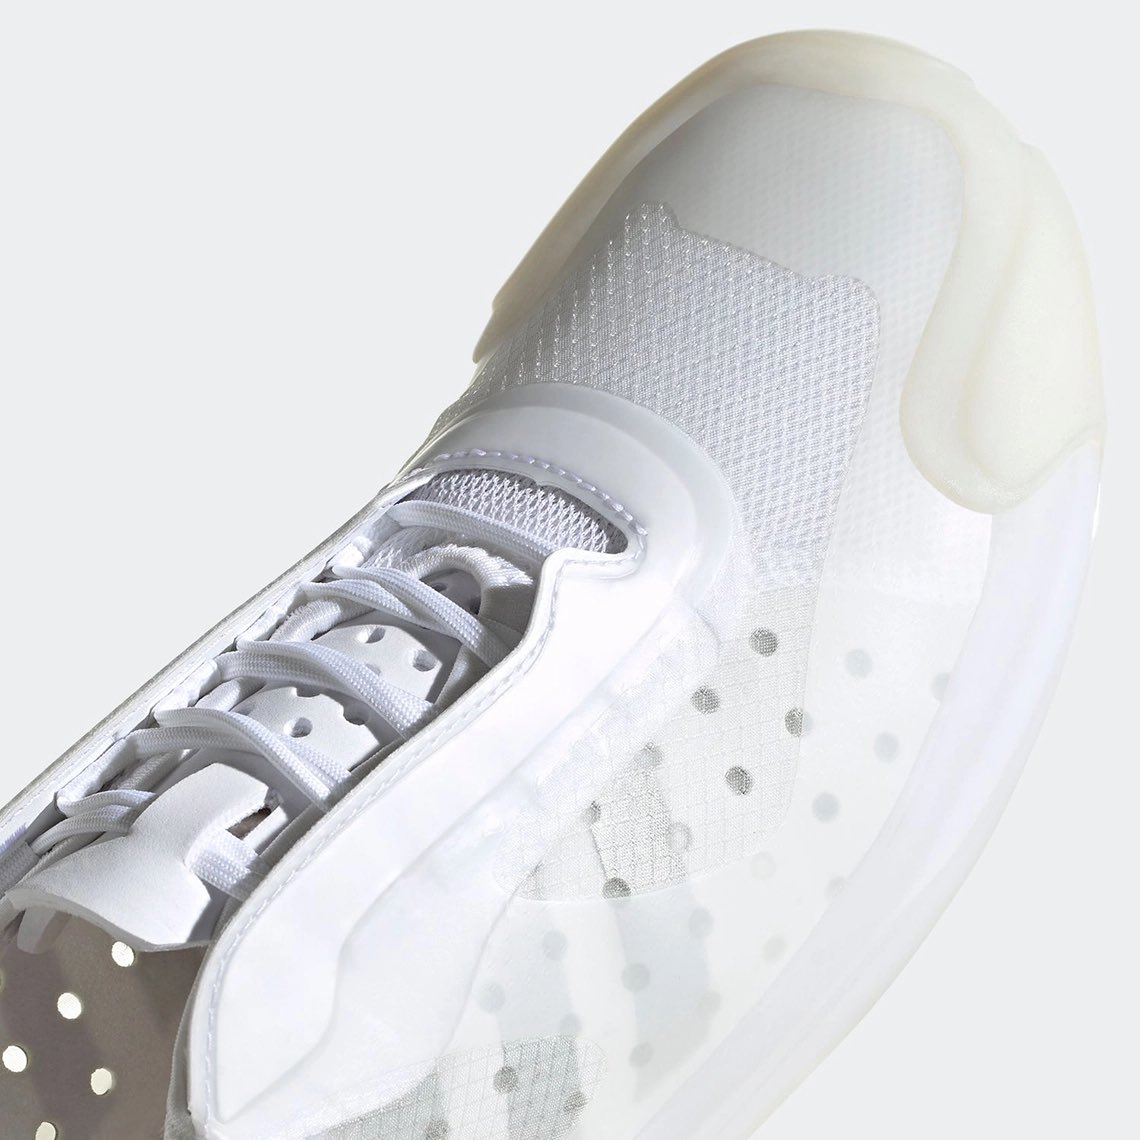 prada-adidas-originals-luna-rossa-sneaker-launch-date-december-9